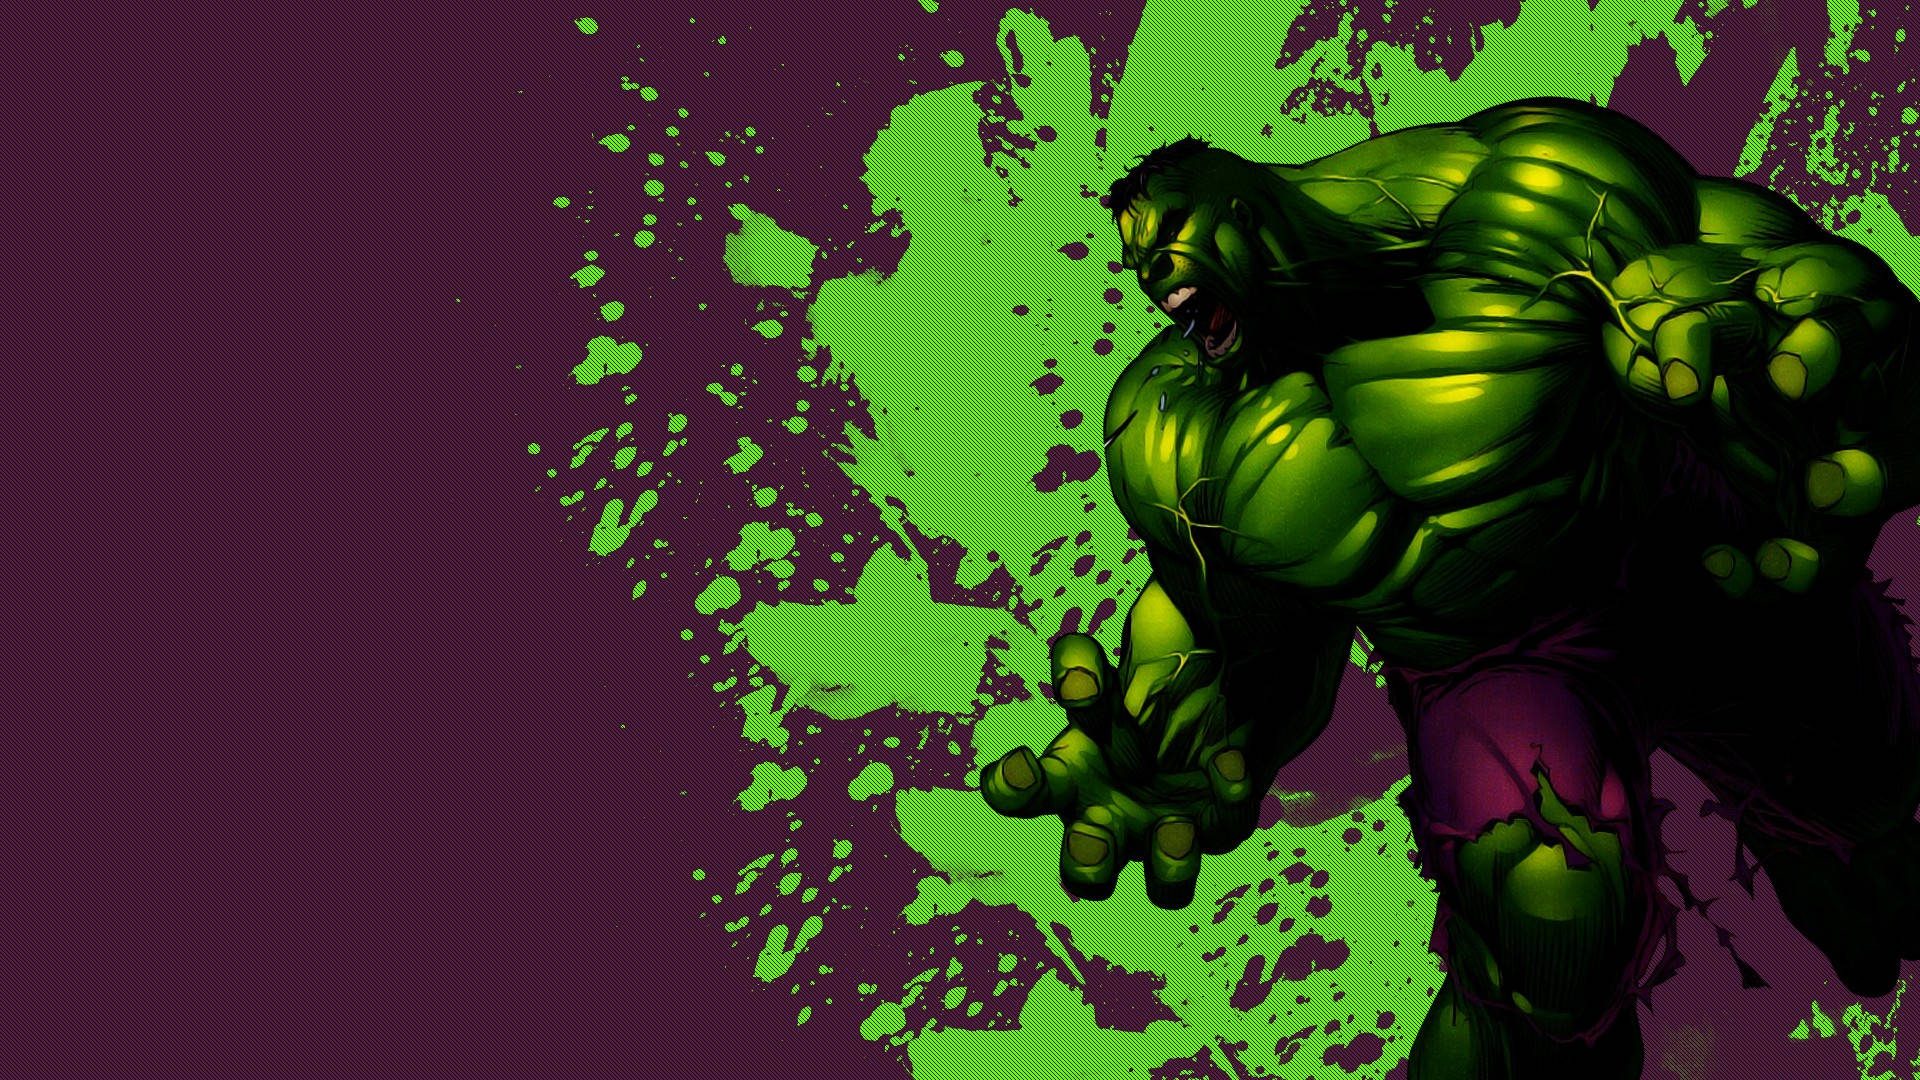 Free Hulk Wallpaper Downloads, [200+] Hulk Wallpapers for FREE | Wallpapers .com